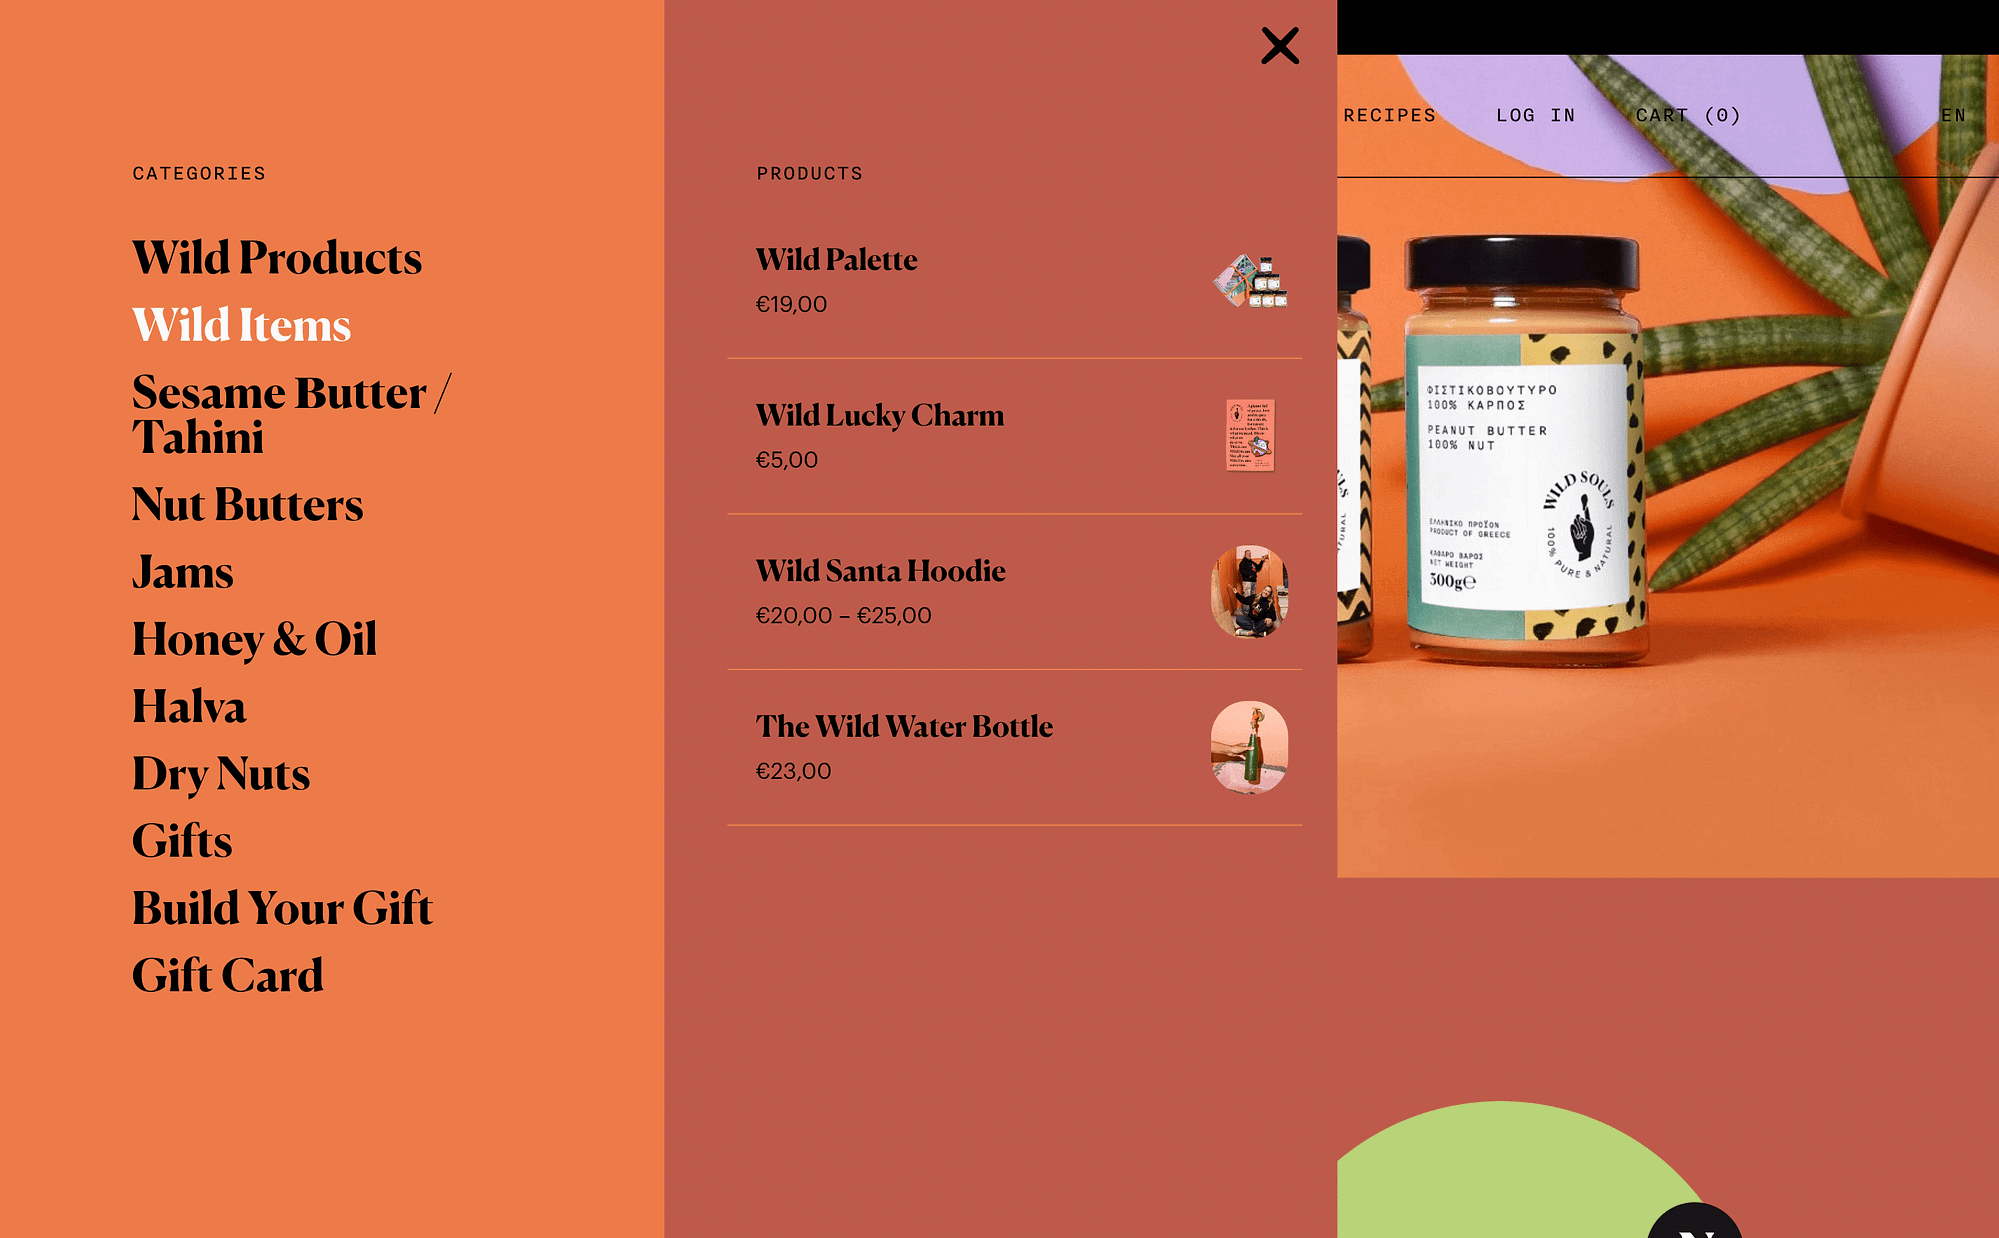 The Wild Souls website's vertical product menu.